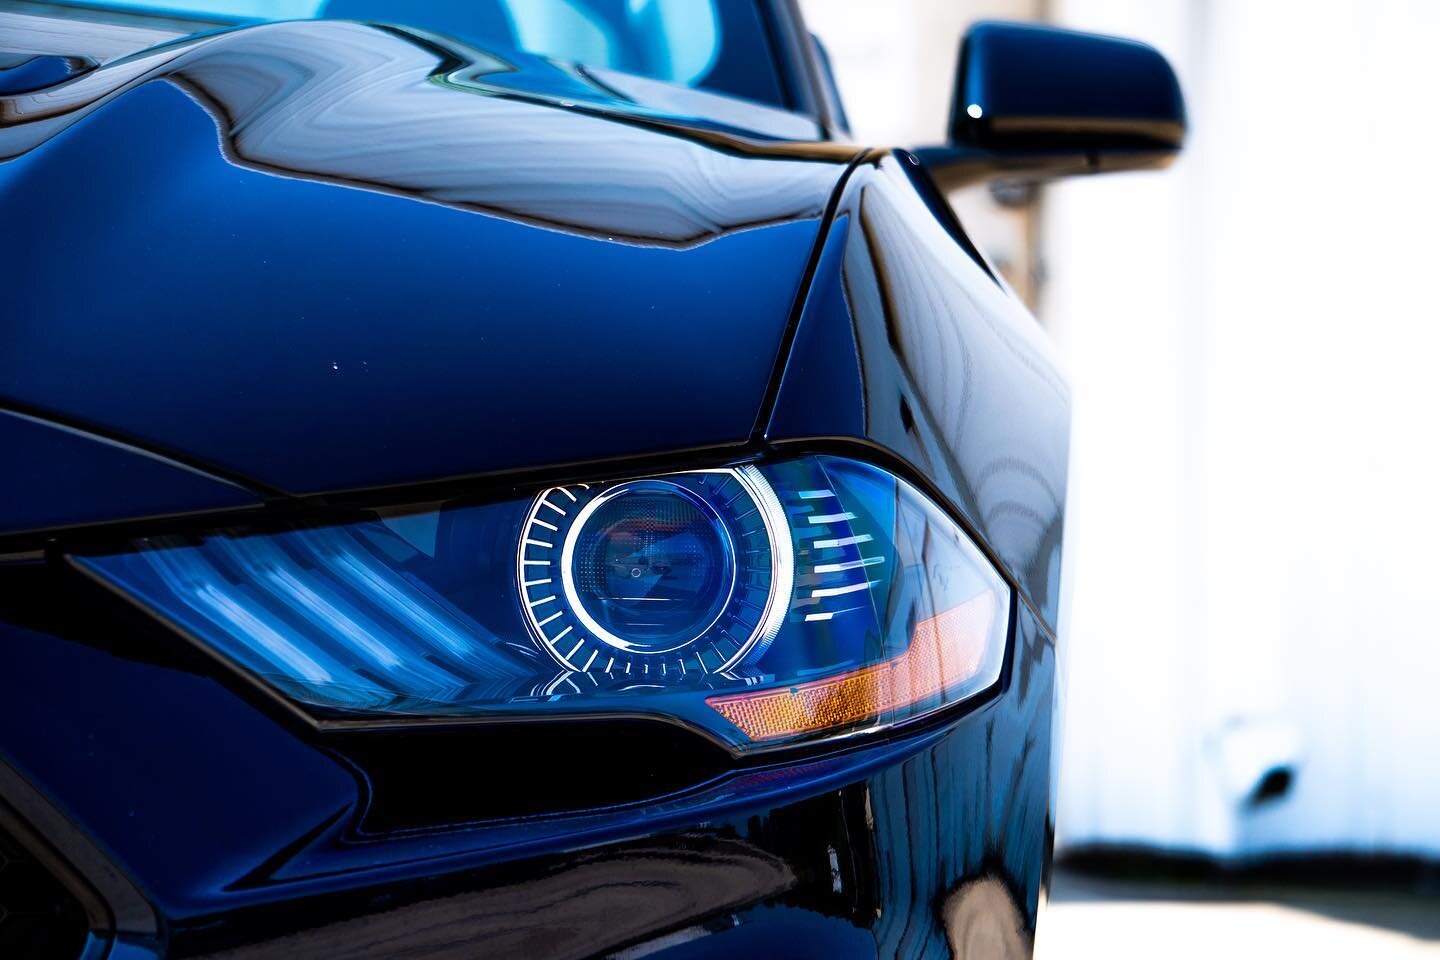 Mustang Monday👁️

#automotivephotography #automotive #photography #photographer #cars #carsofinstagram #instacars #mustang #ford #fordmustang #mustangphotography #wulffmediagroup #mustangmonday #photooftheday